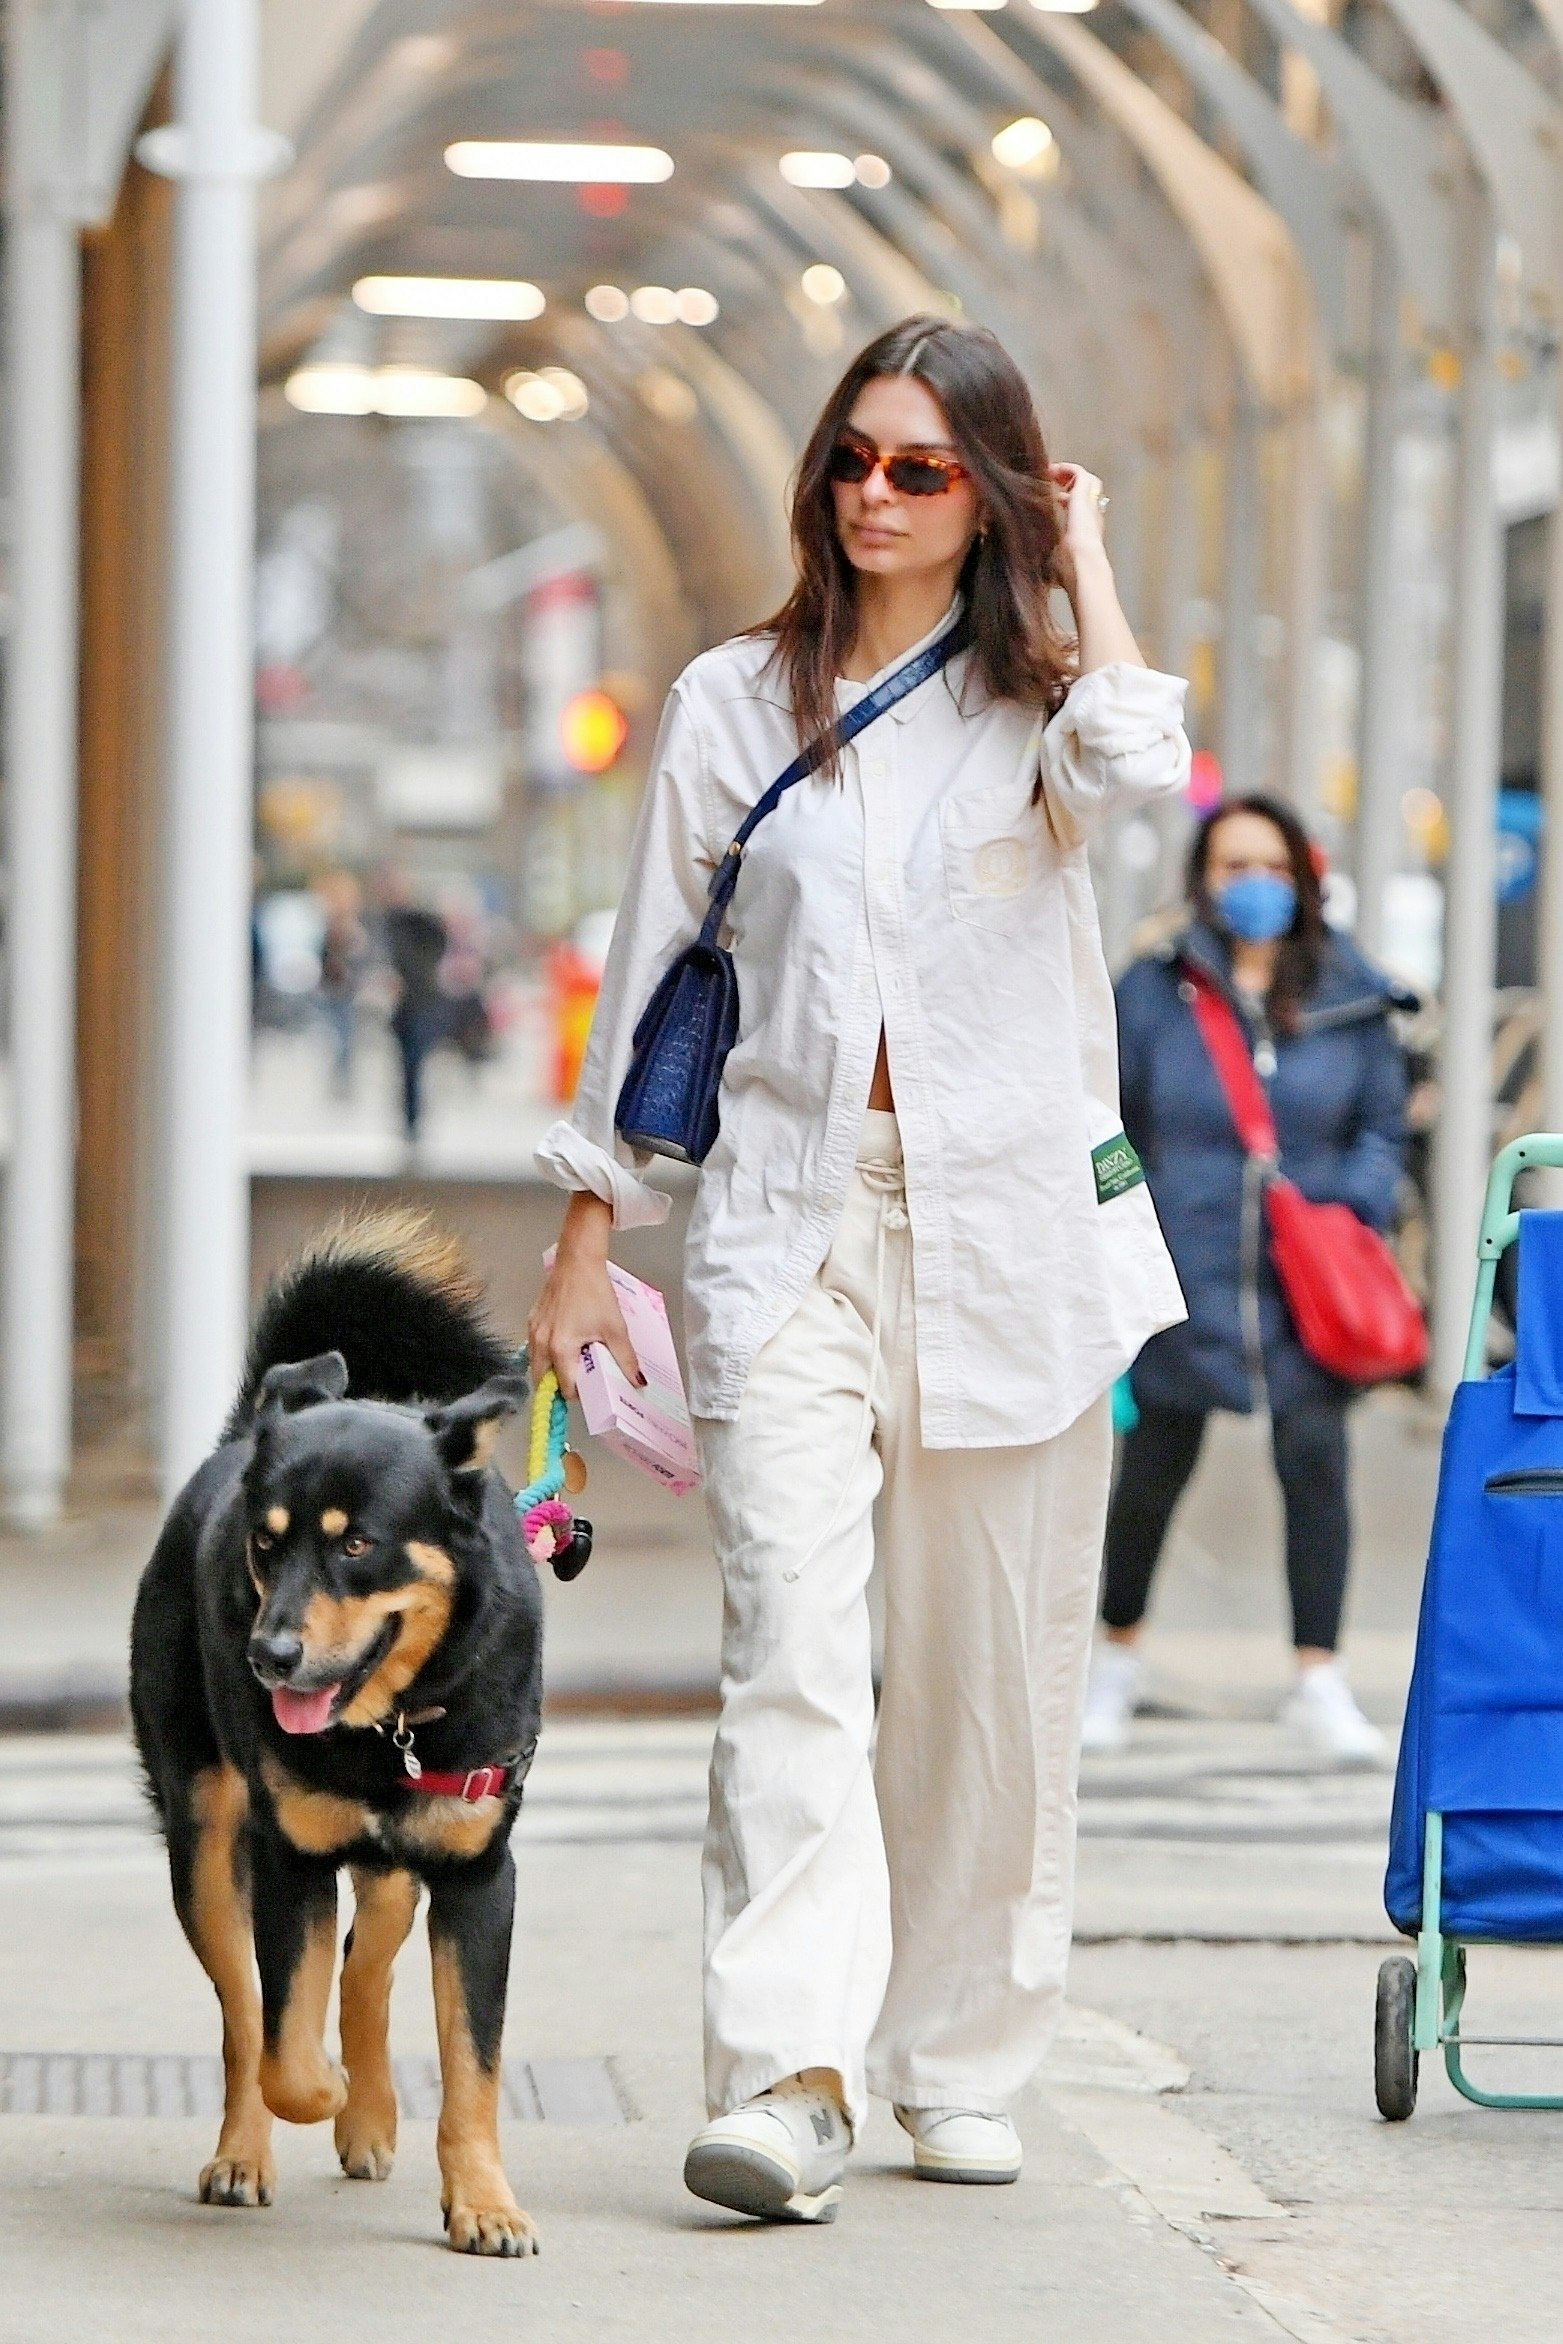 Emily Ratajkowski's Dog-Walking Outfits Deserve A Closer Look